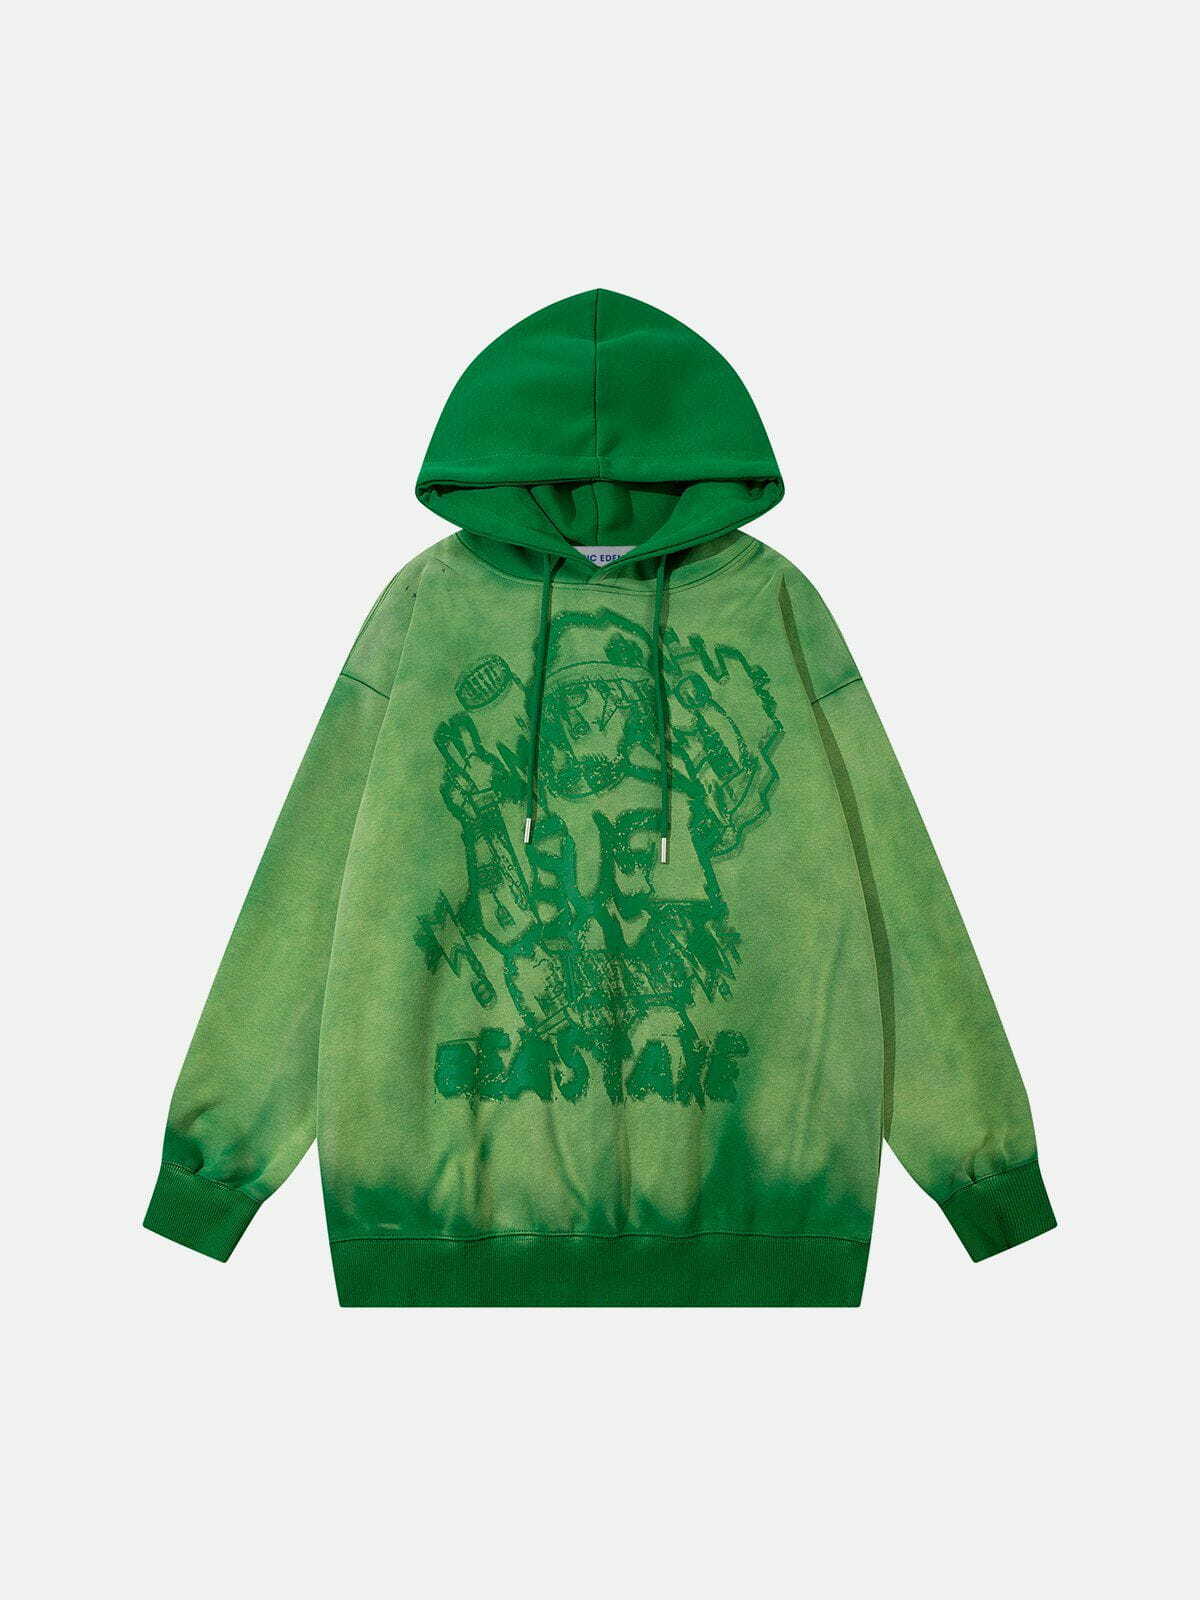 graffiti print washed hoodie edgy streetwear essential 4267